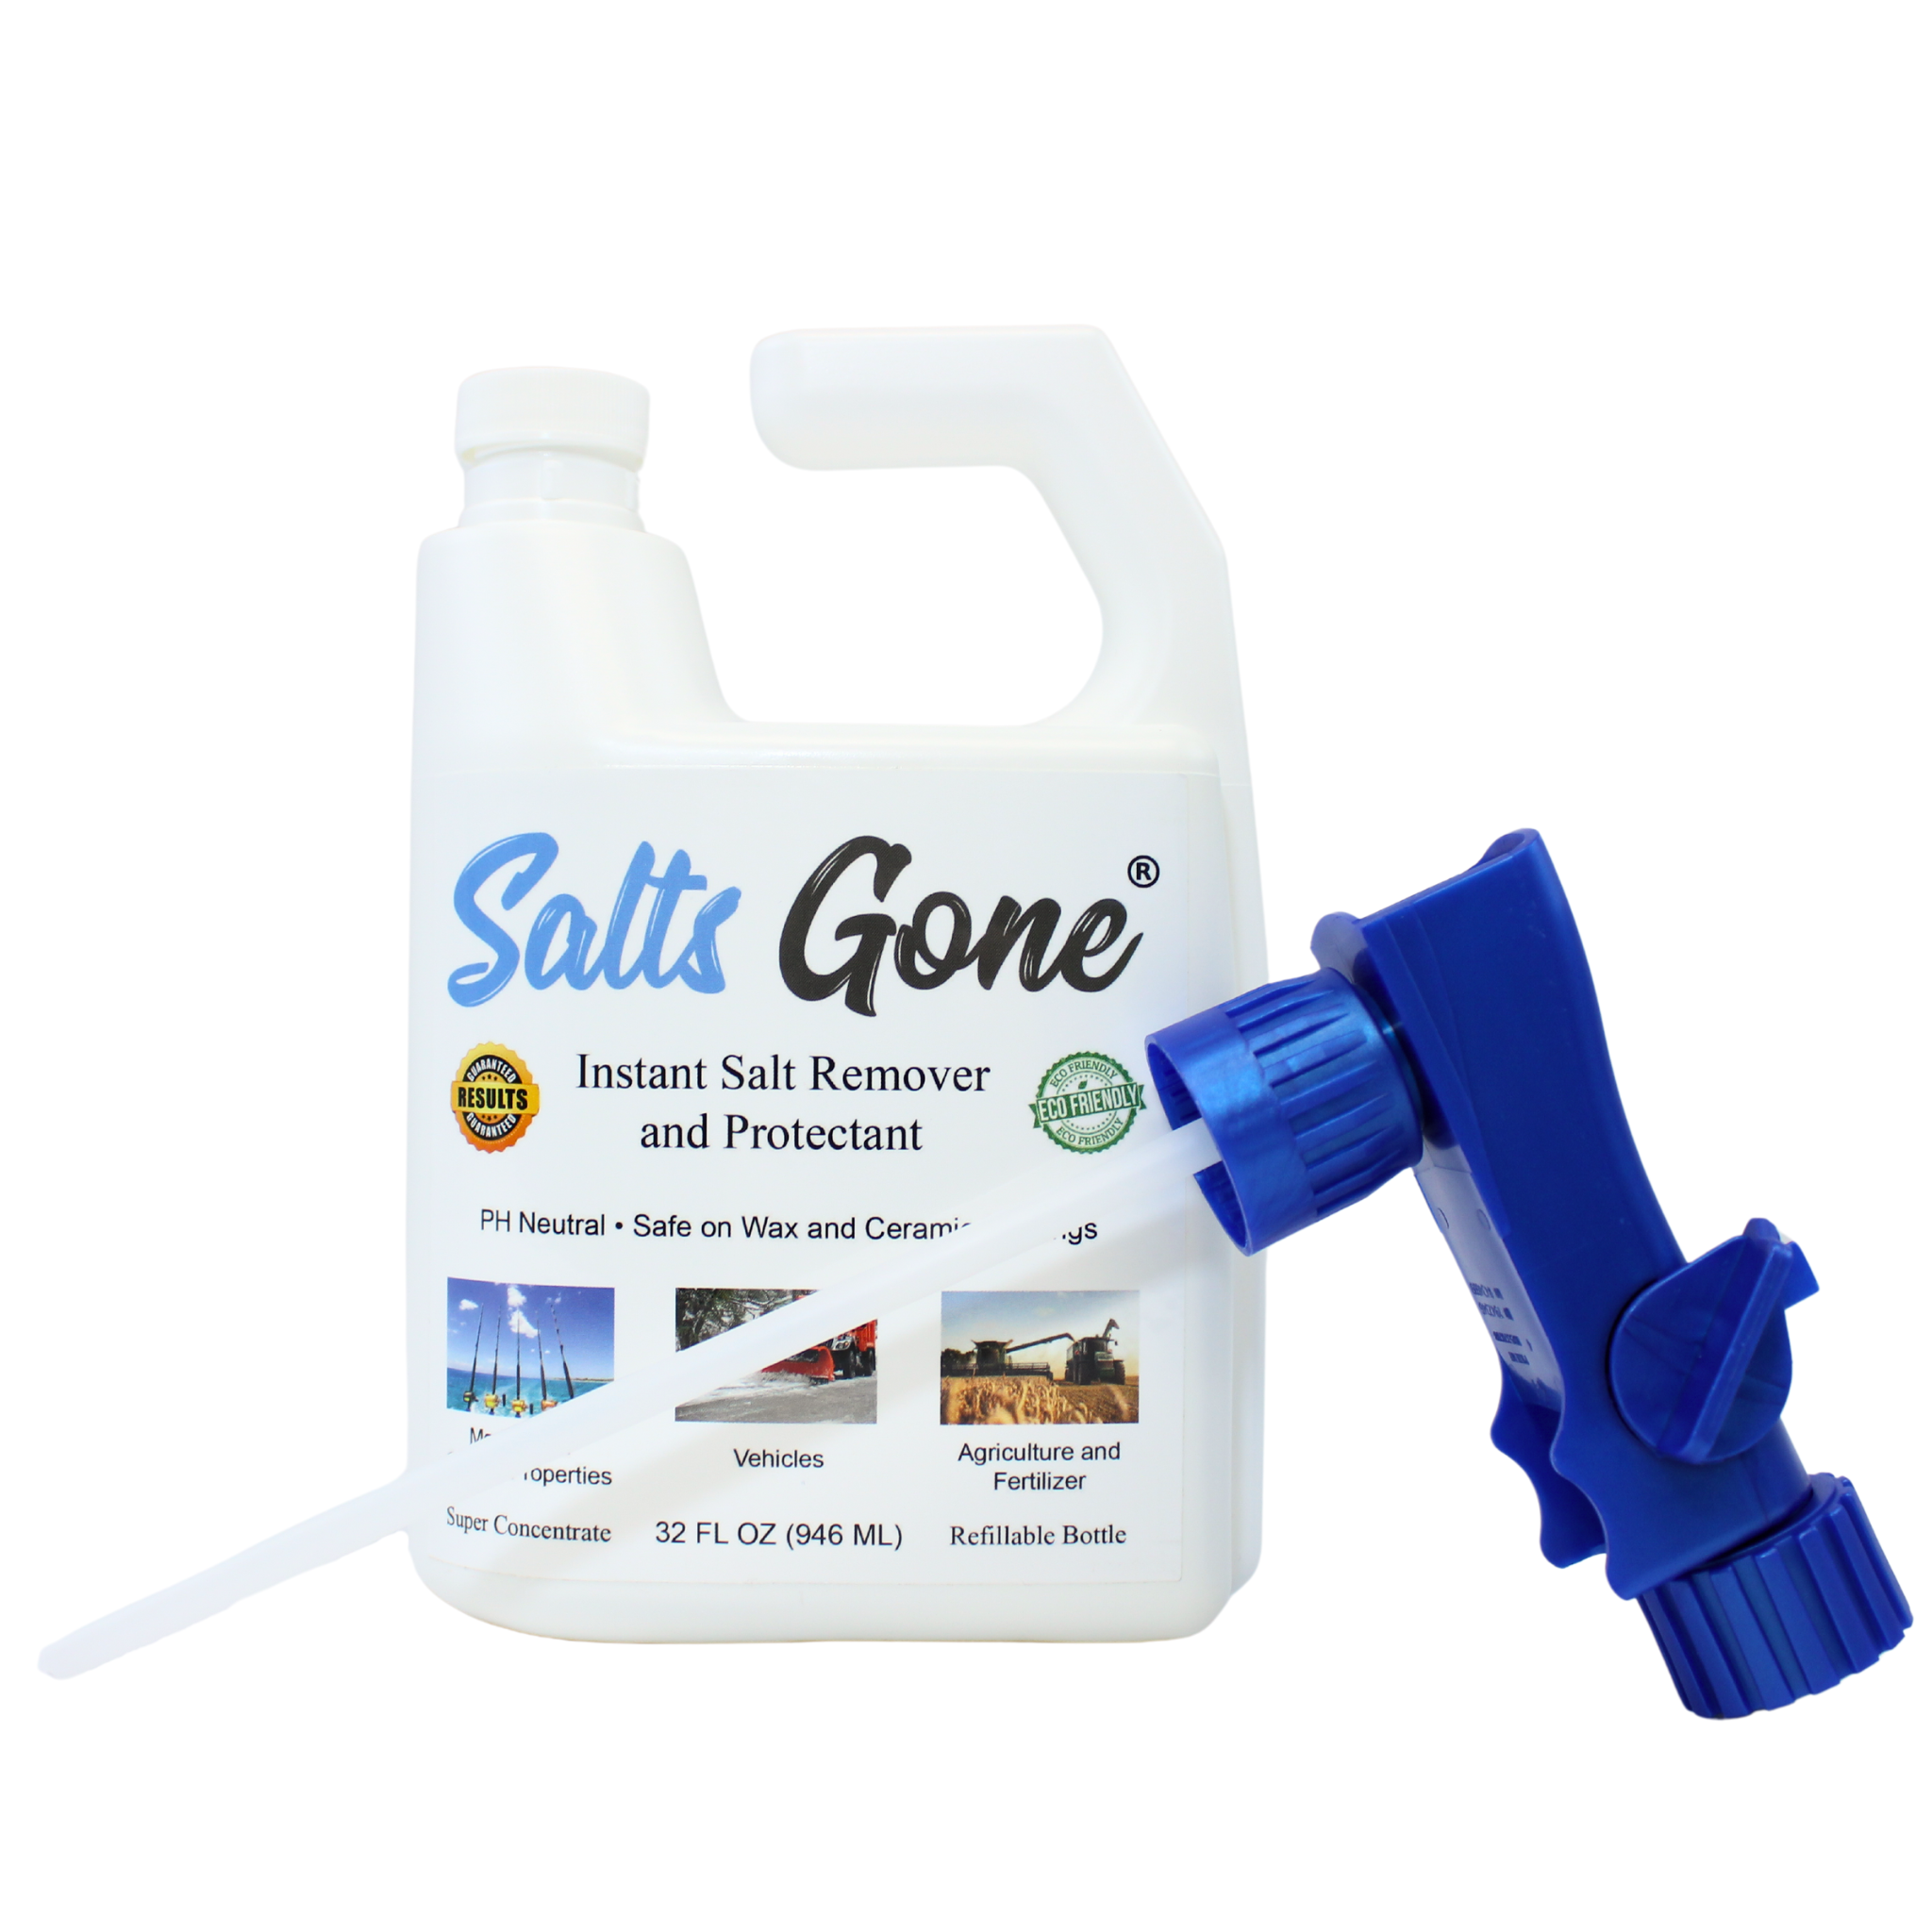 Salt-Away Salt Remover Spray - 16 Fl. oz. : Sports & Outdoors 